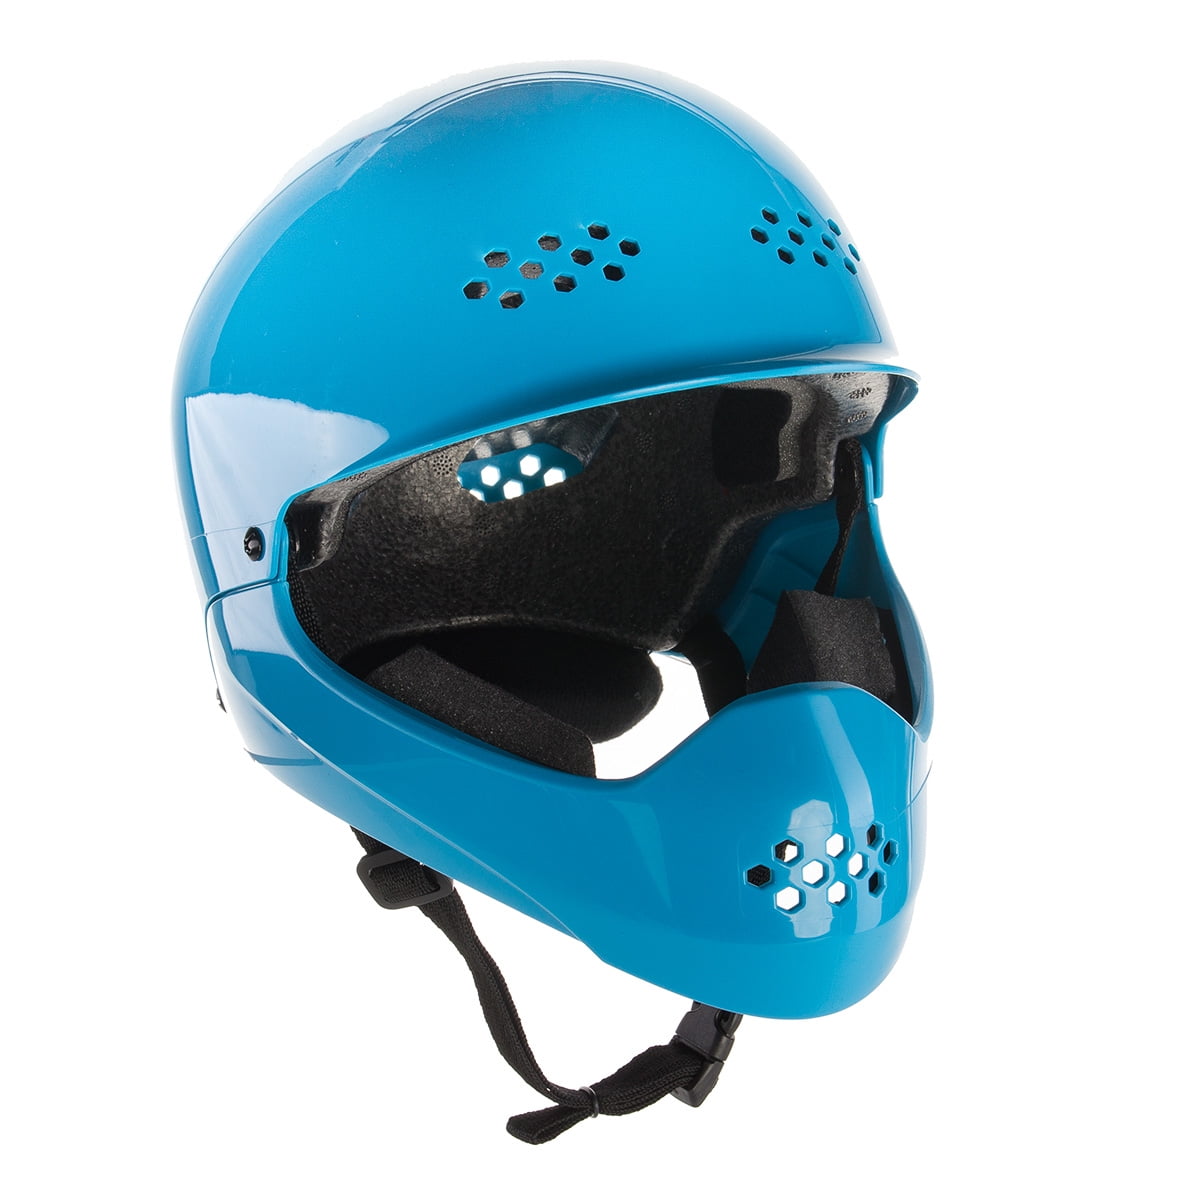 ROKOO Adult Bike Helmet MTB Mountain Road Bicycle Motocyle Helmet Riding Accessories 